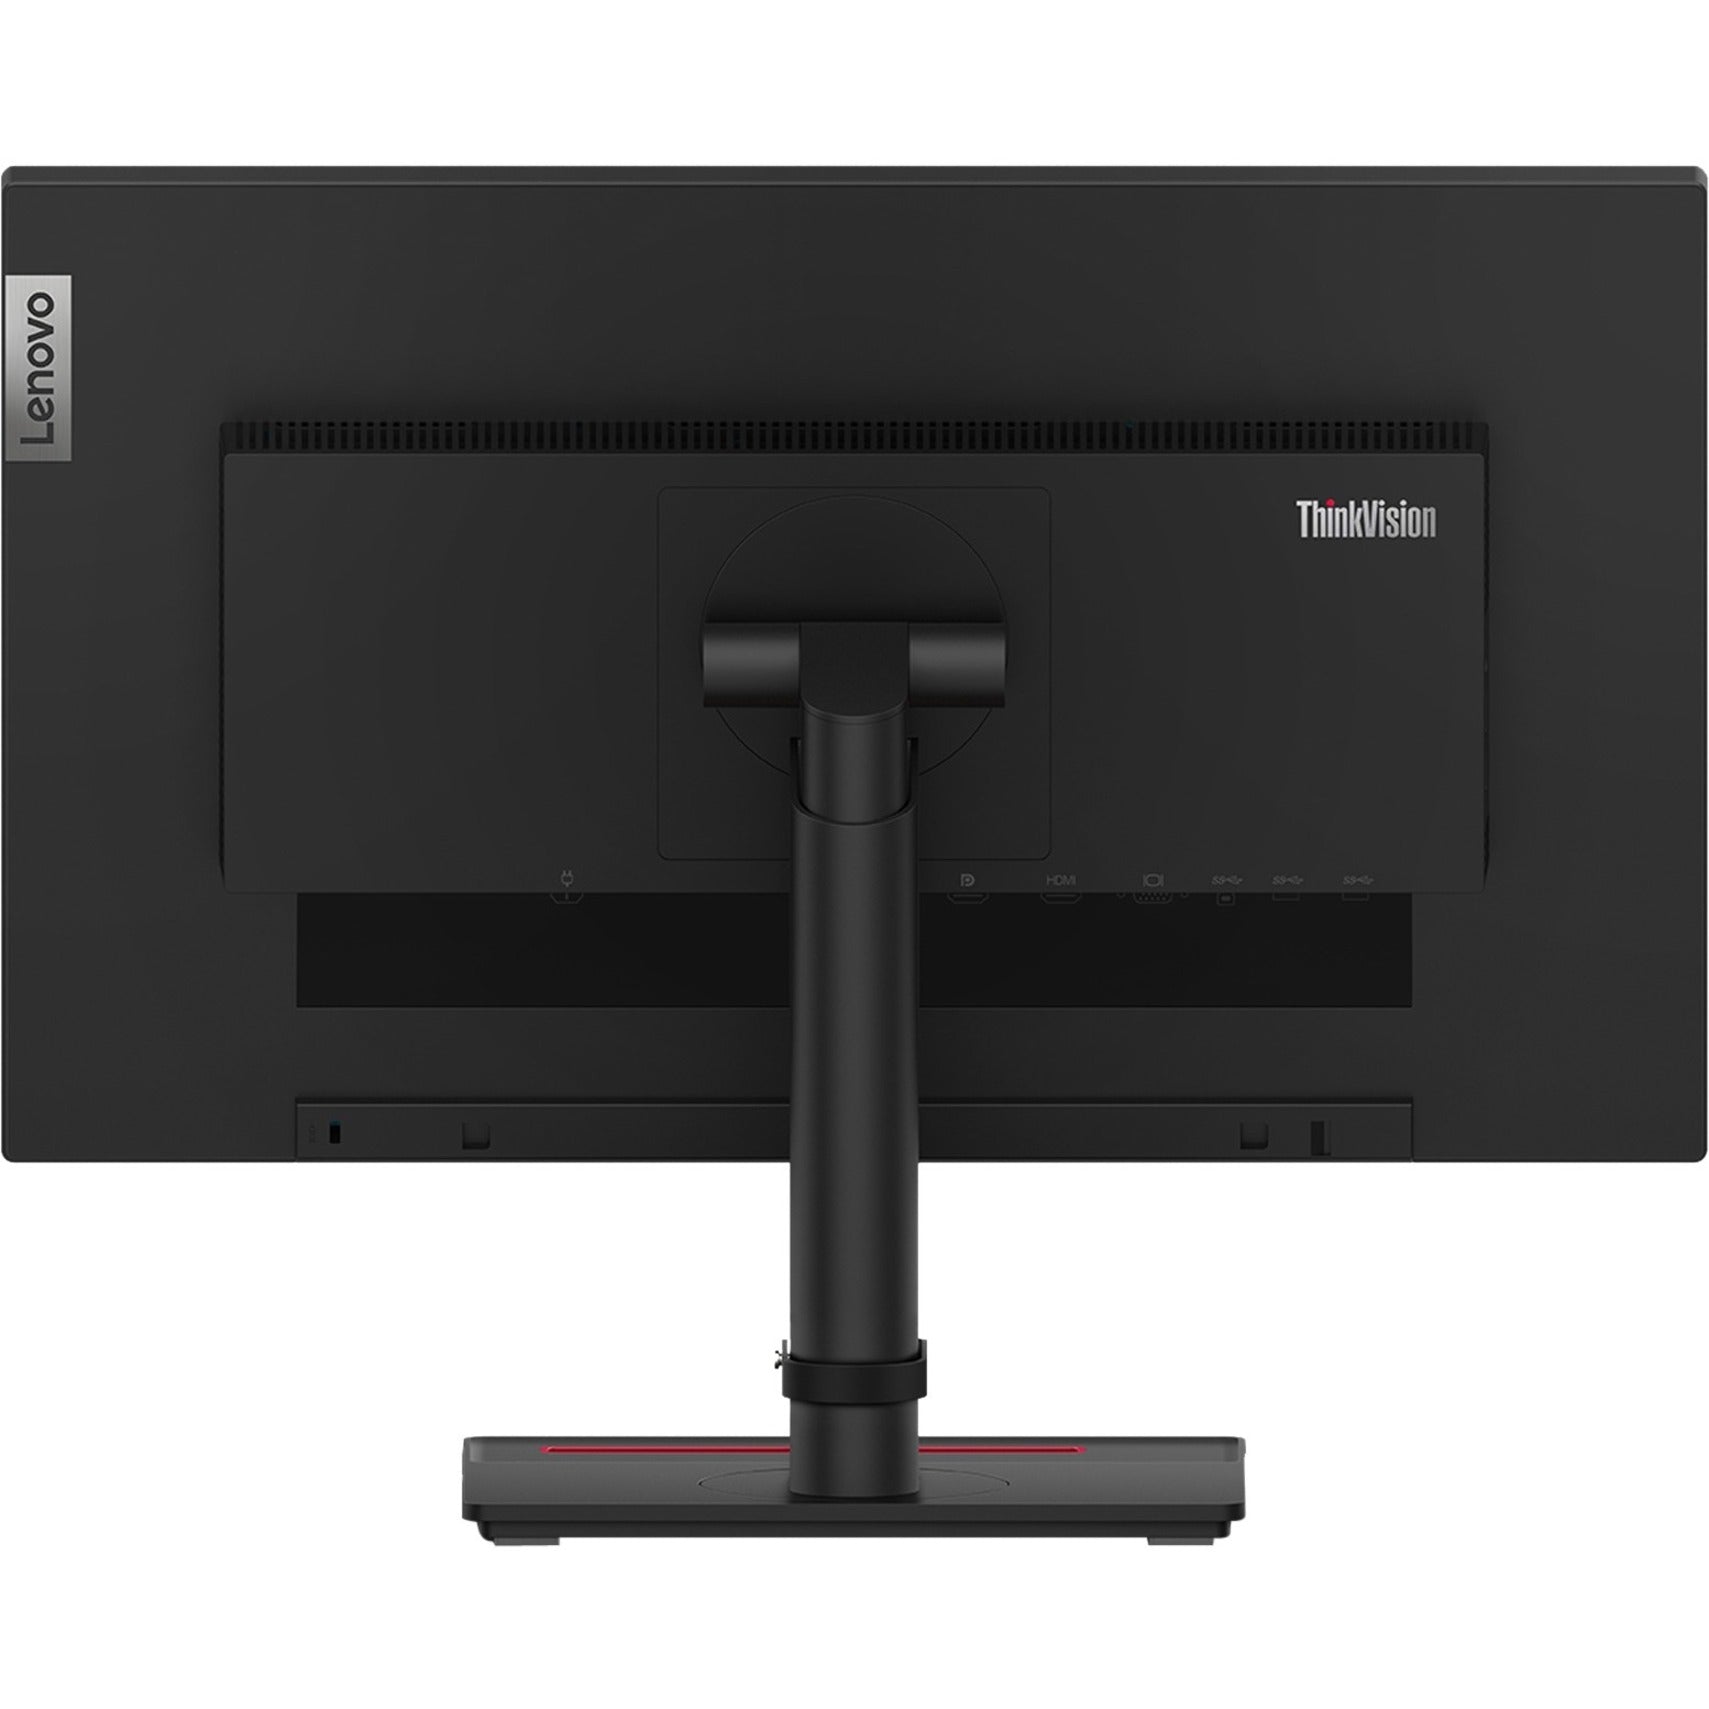 Lenovo 61F6MAT2US ThinkVision T23i-20 23-inch FHD LED Backlit LCD Monitor, Full HD, IPS Panel, USB Hub, 4 x USB 3.0 Ports